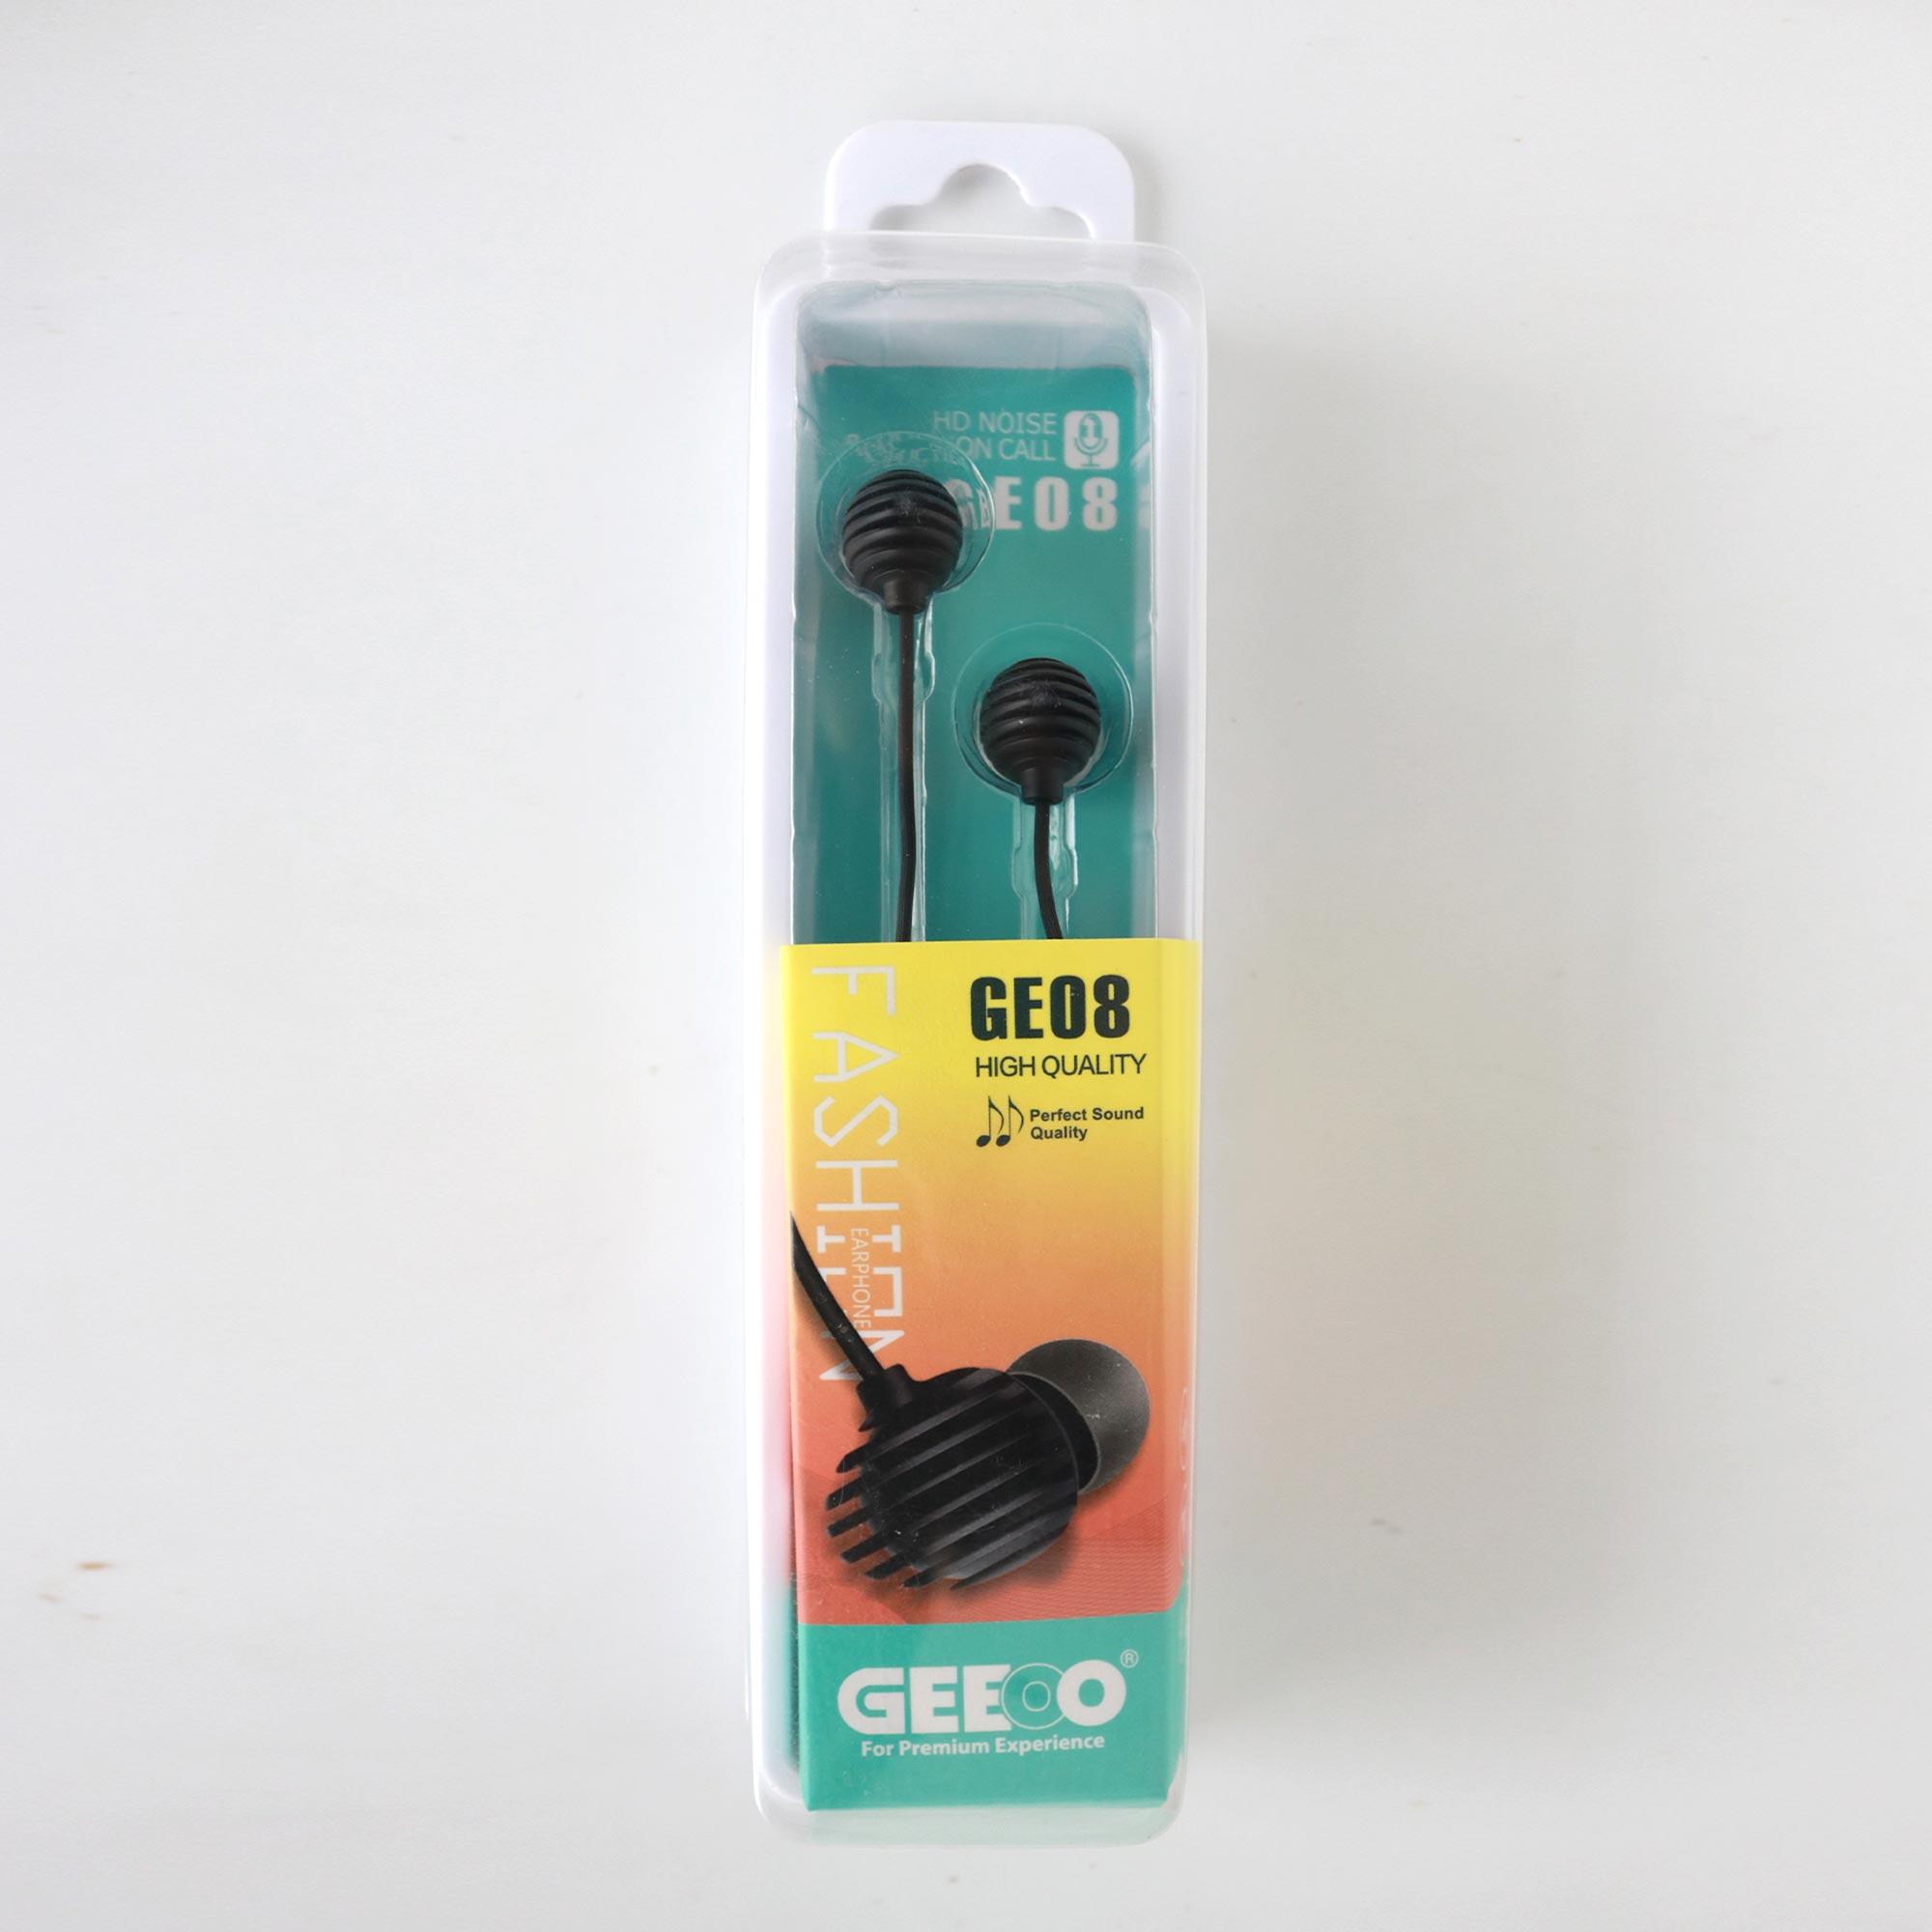 Geeoo GE08 Wired Earphone